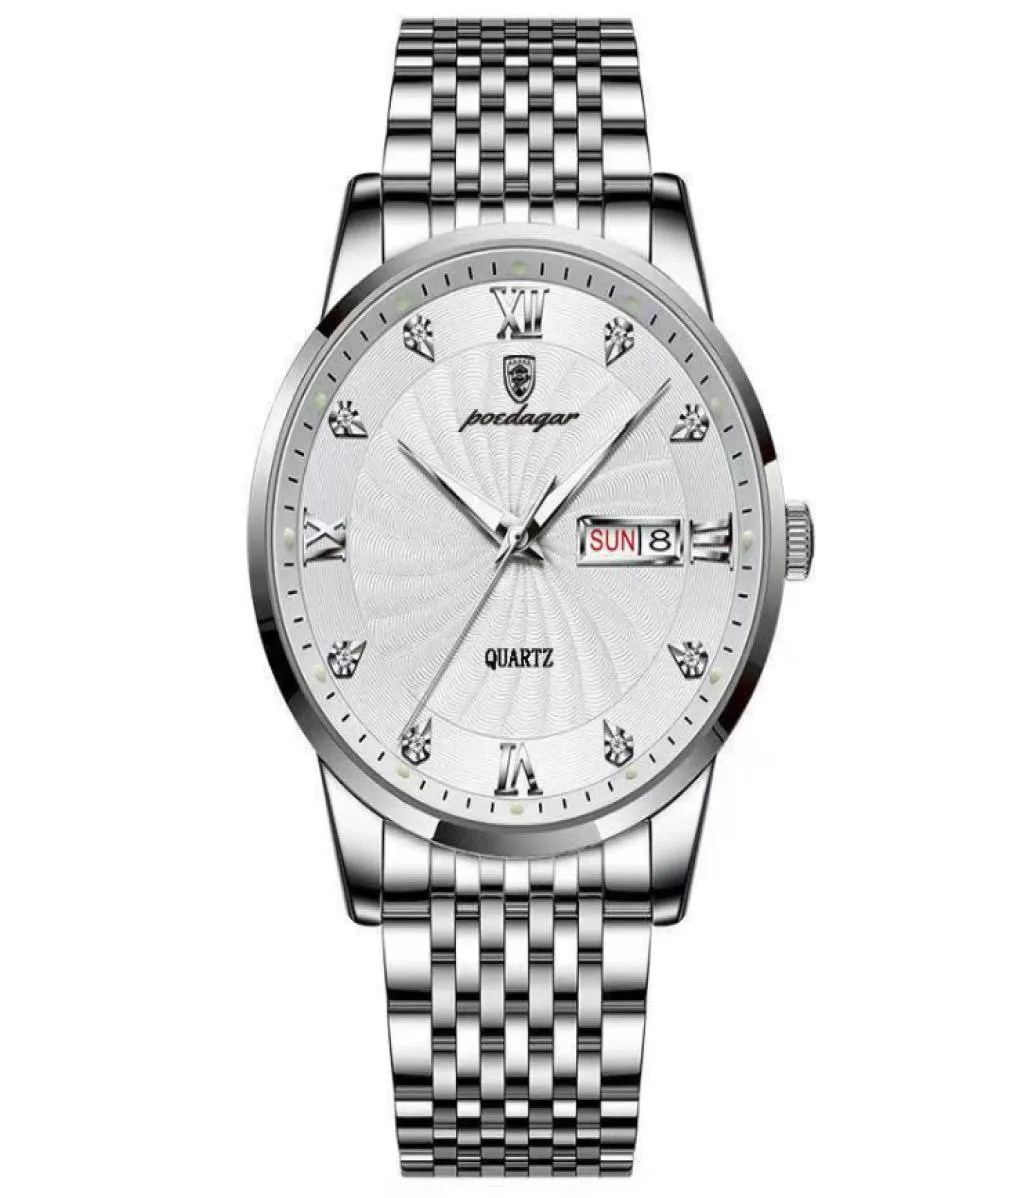 POEDAGAR Brand Luminous Calendar Quartz Mens Watch Luxury Trendy Stainless Steel Wristwatches 42mm Diameter Thin Man Watches9474932